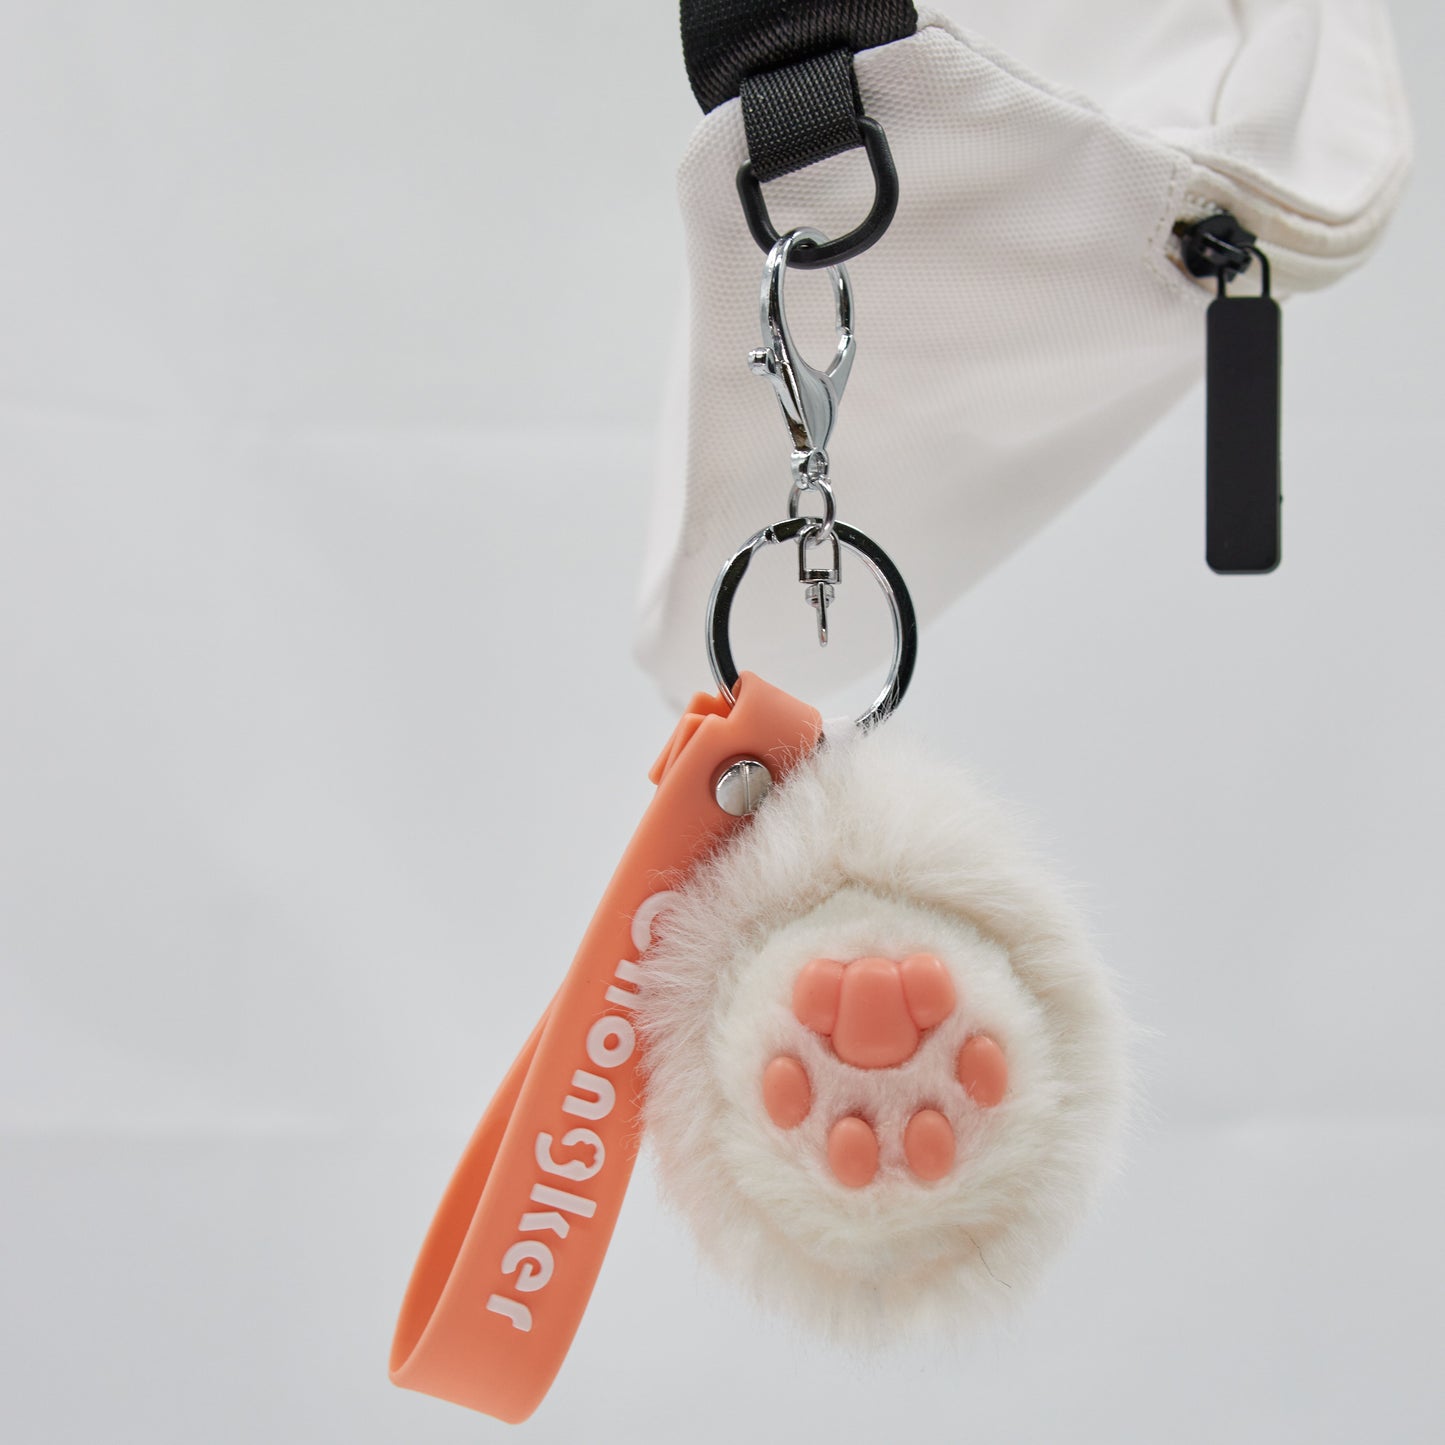 Chongker keychain Realistic Plush Animal Paw Kawaii keychain